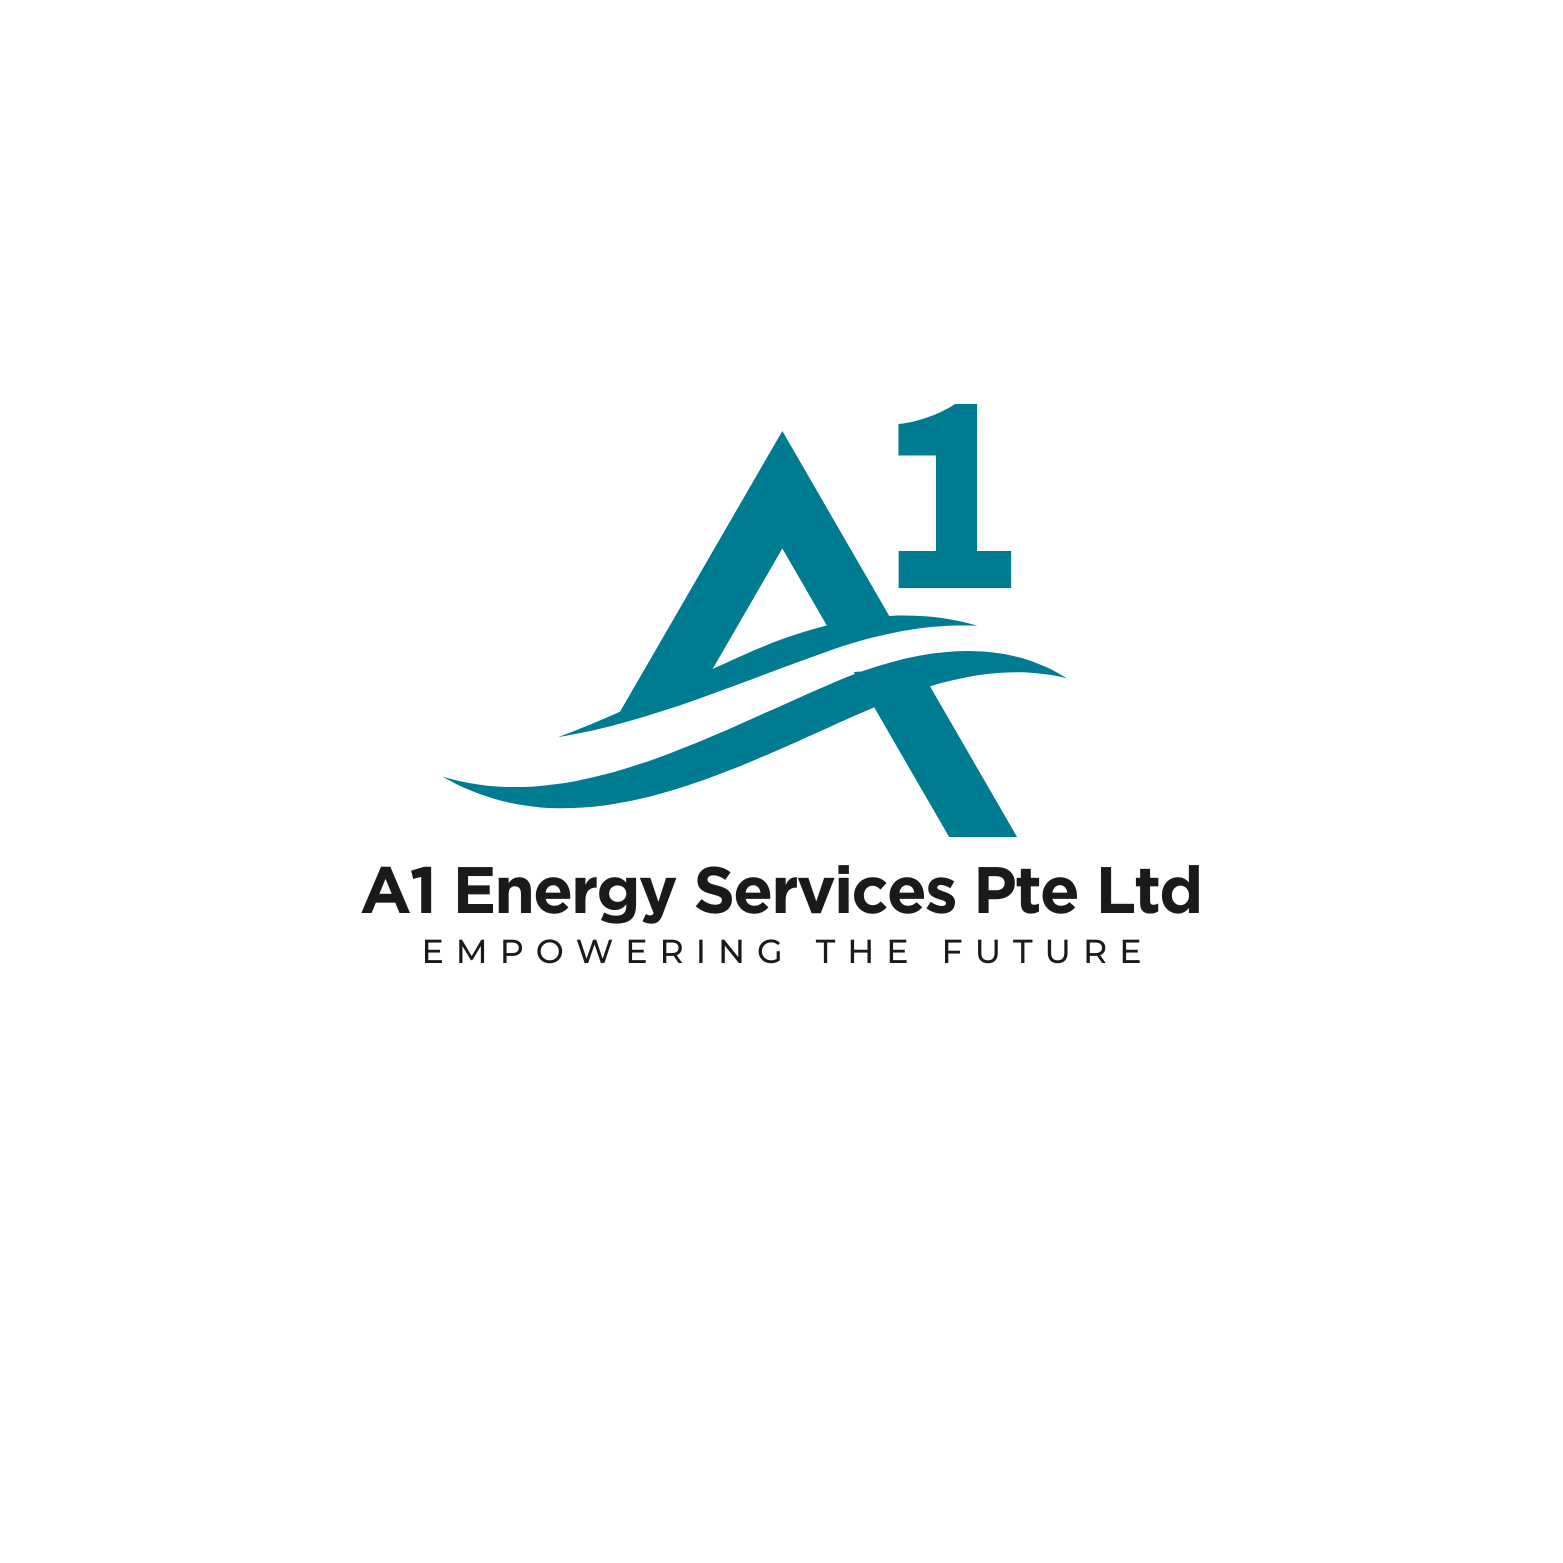 A1 Energy Services Pte. Ltd. company logo